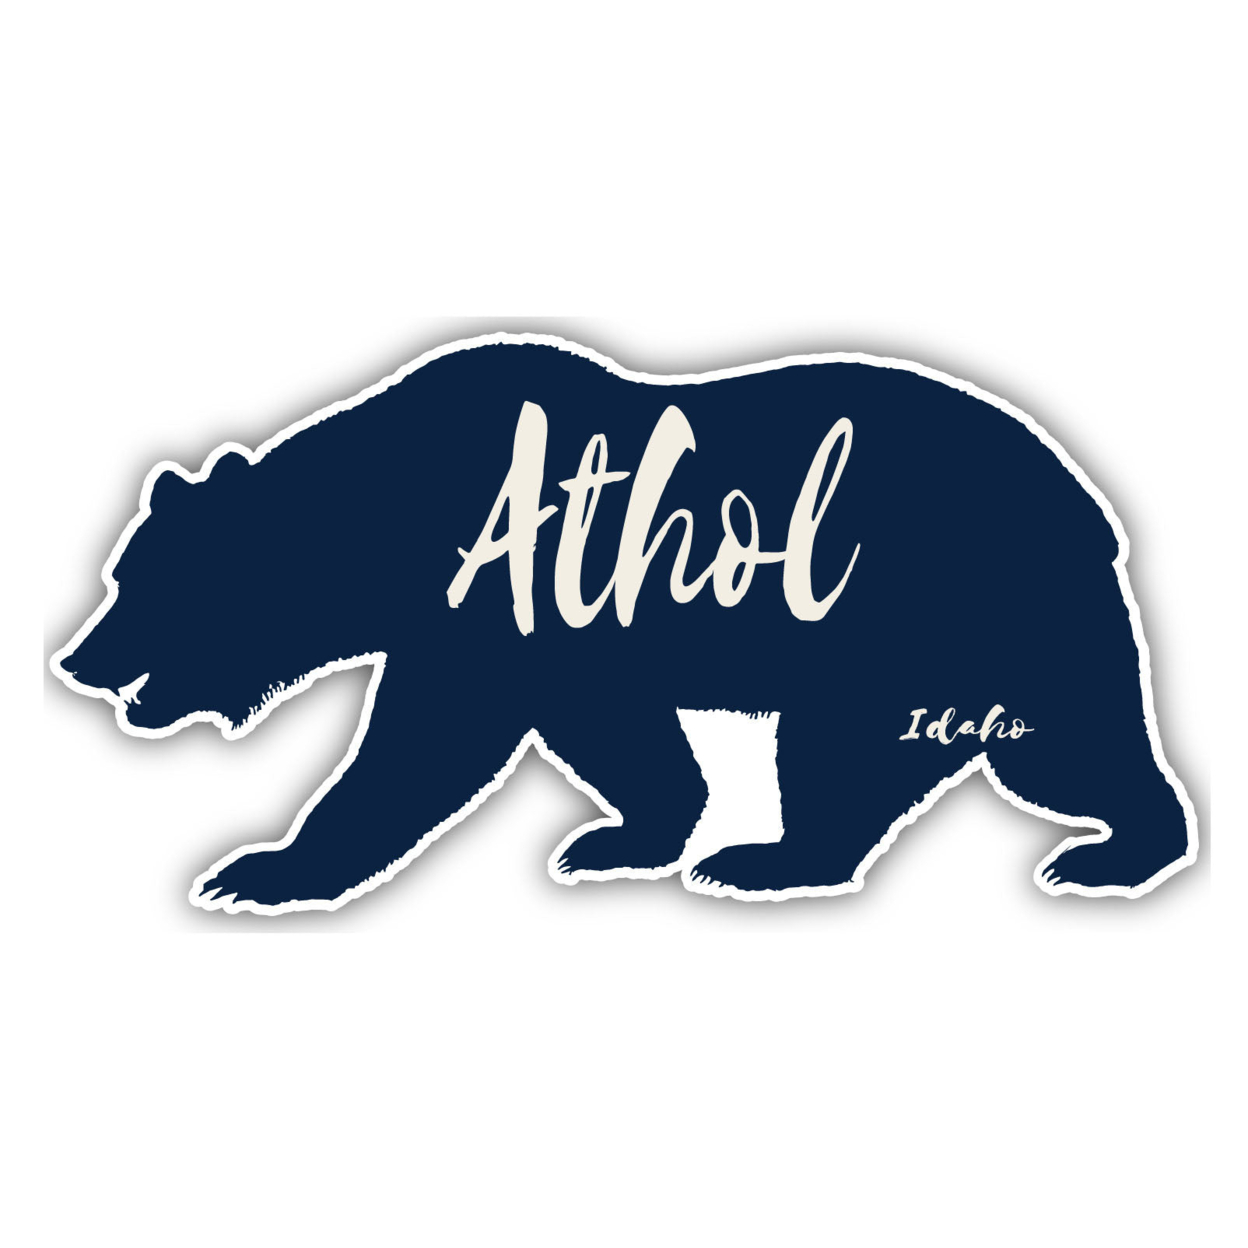 Athol Idaho Souvenir Decorative Stickers (Choose Theme And Size) - 4-Pack, 12-Inch, Bear